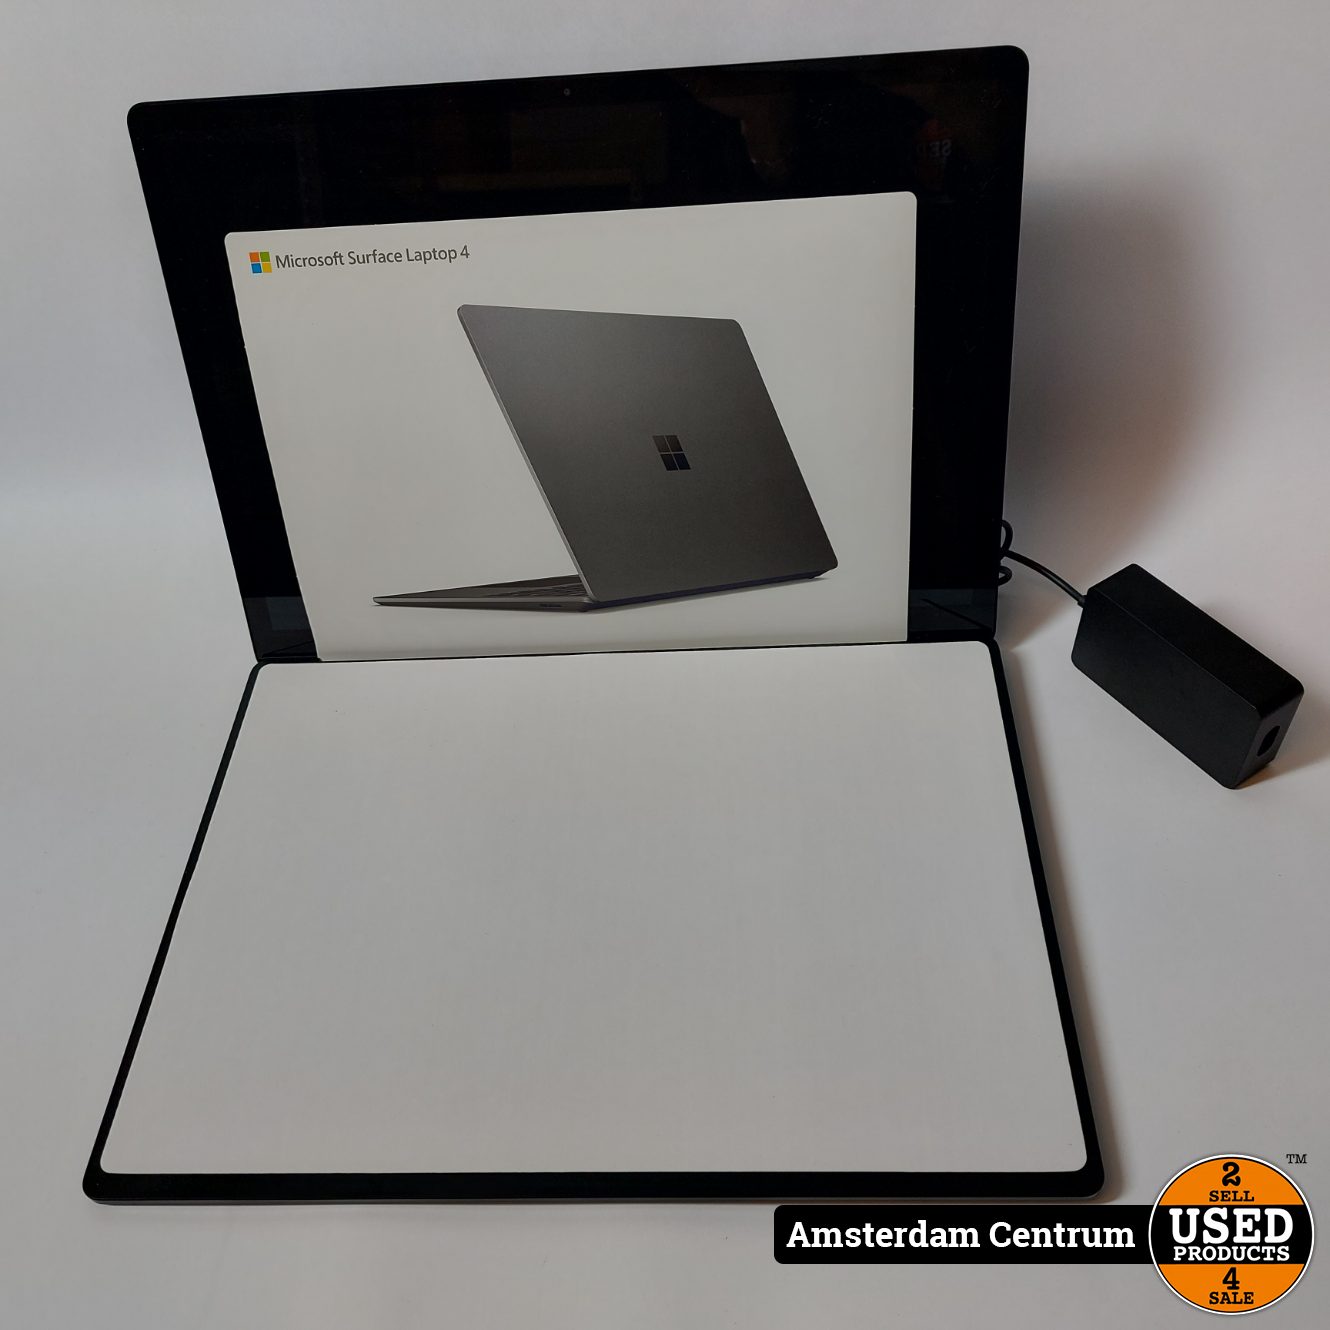 Fictief fout boeket Microsoft Surface Laptop 4 Intel core i7 11gen - Used Products Amsterdam  Centrum